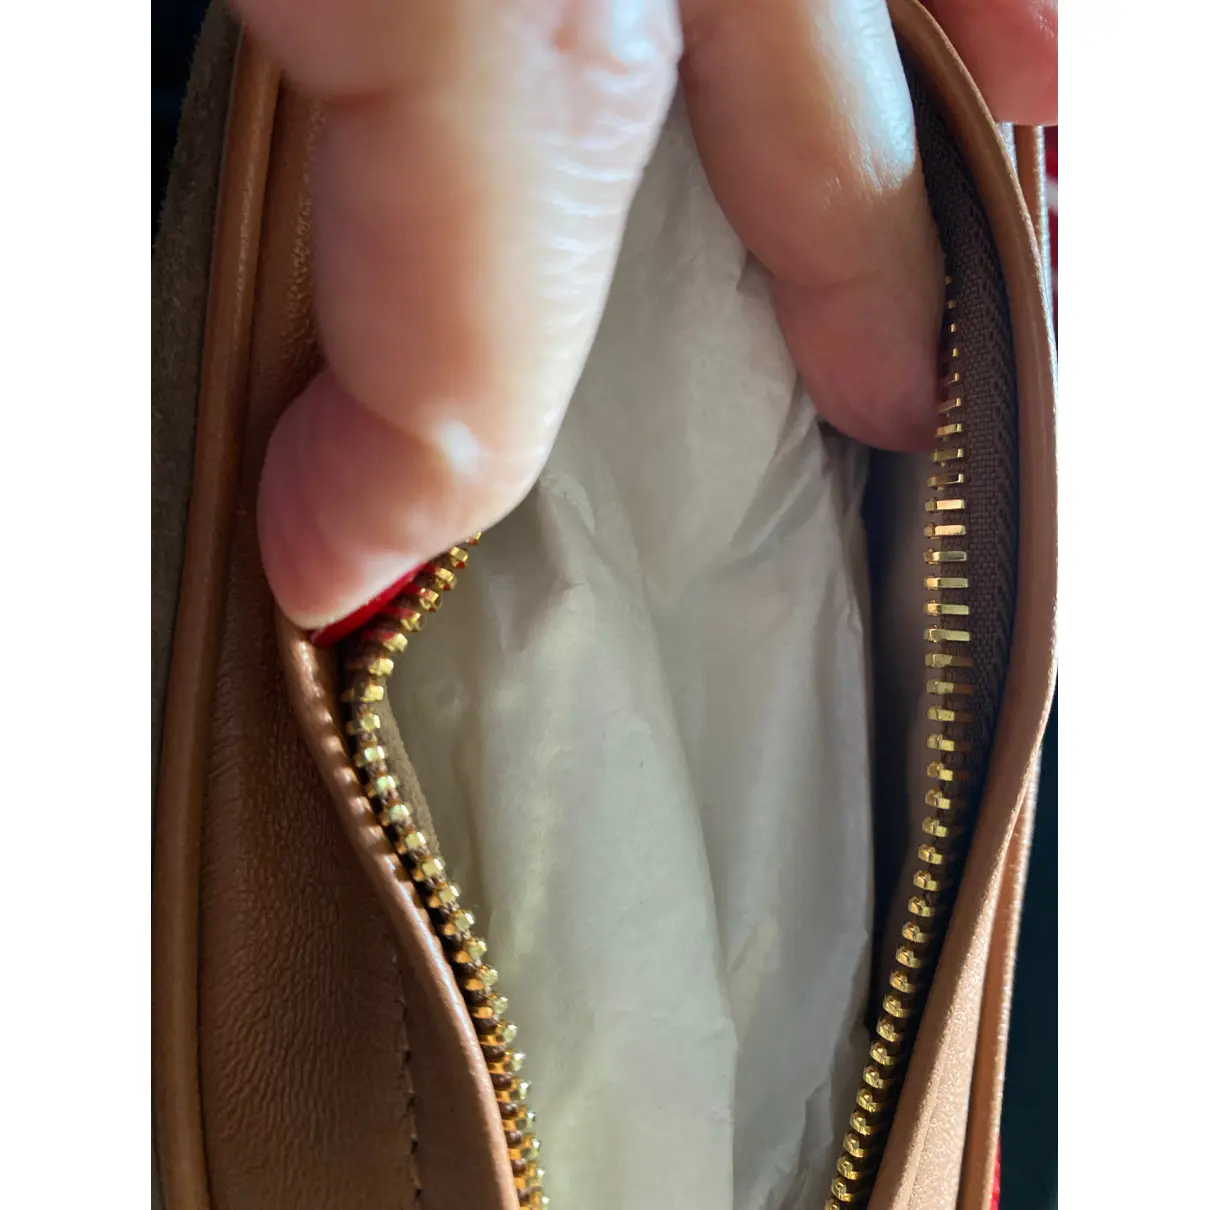 Leather handbag N°21